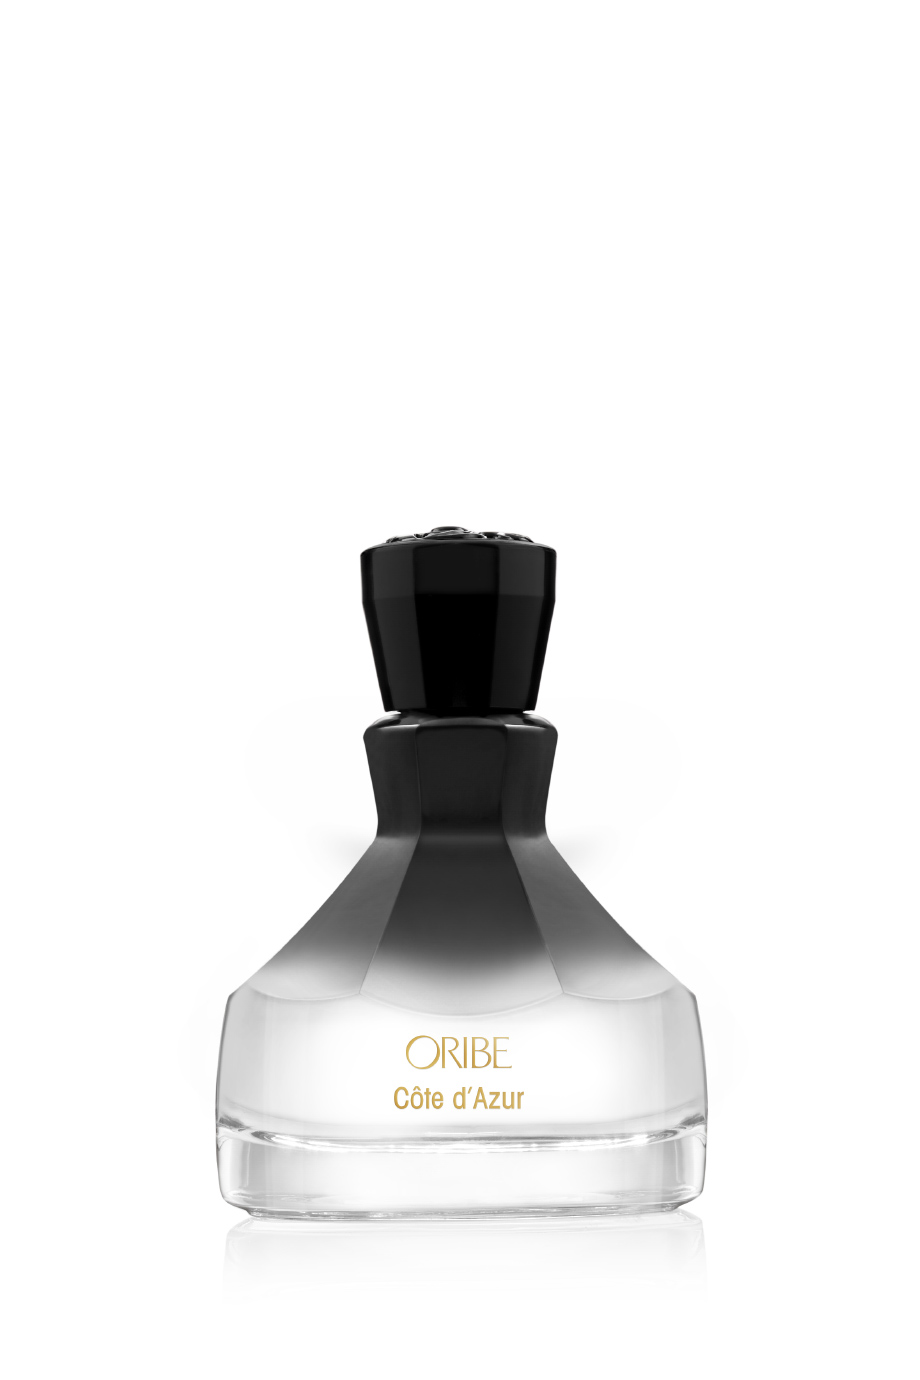 Купить Oribe Eau de Parfum Cote d'Azur